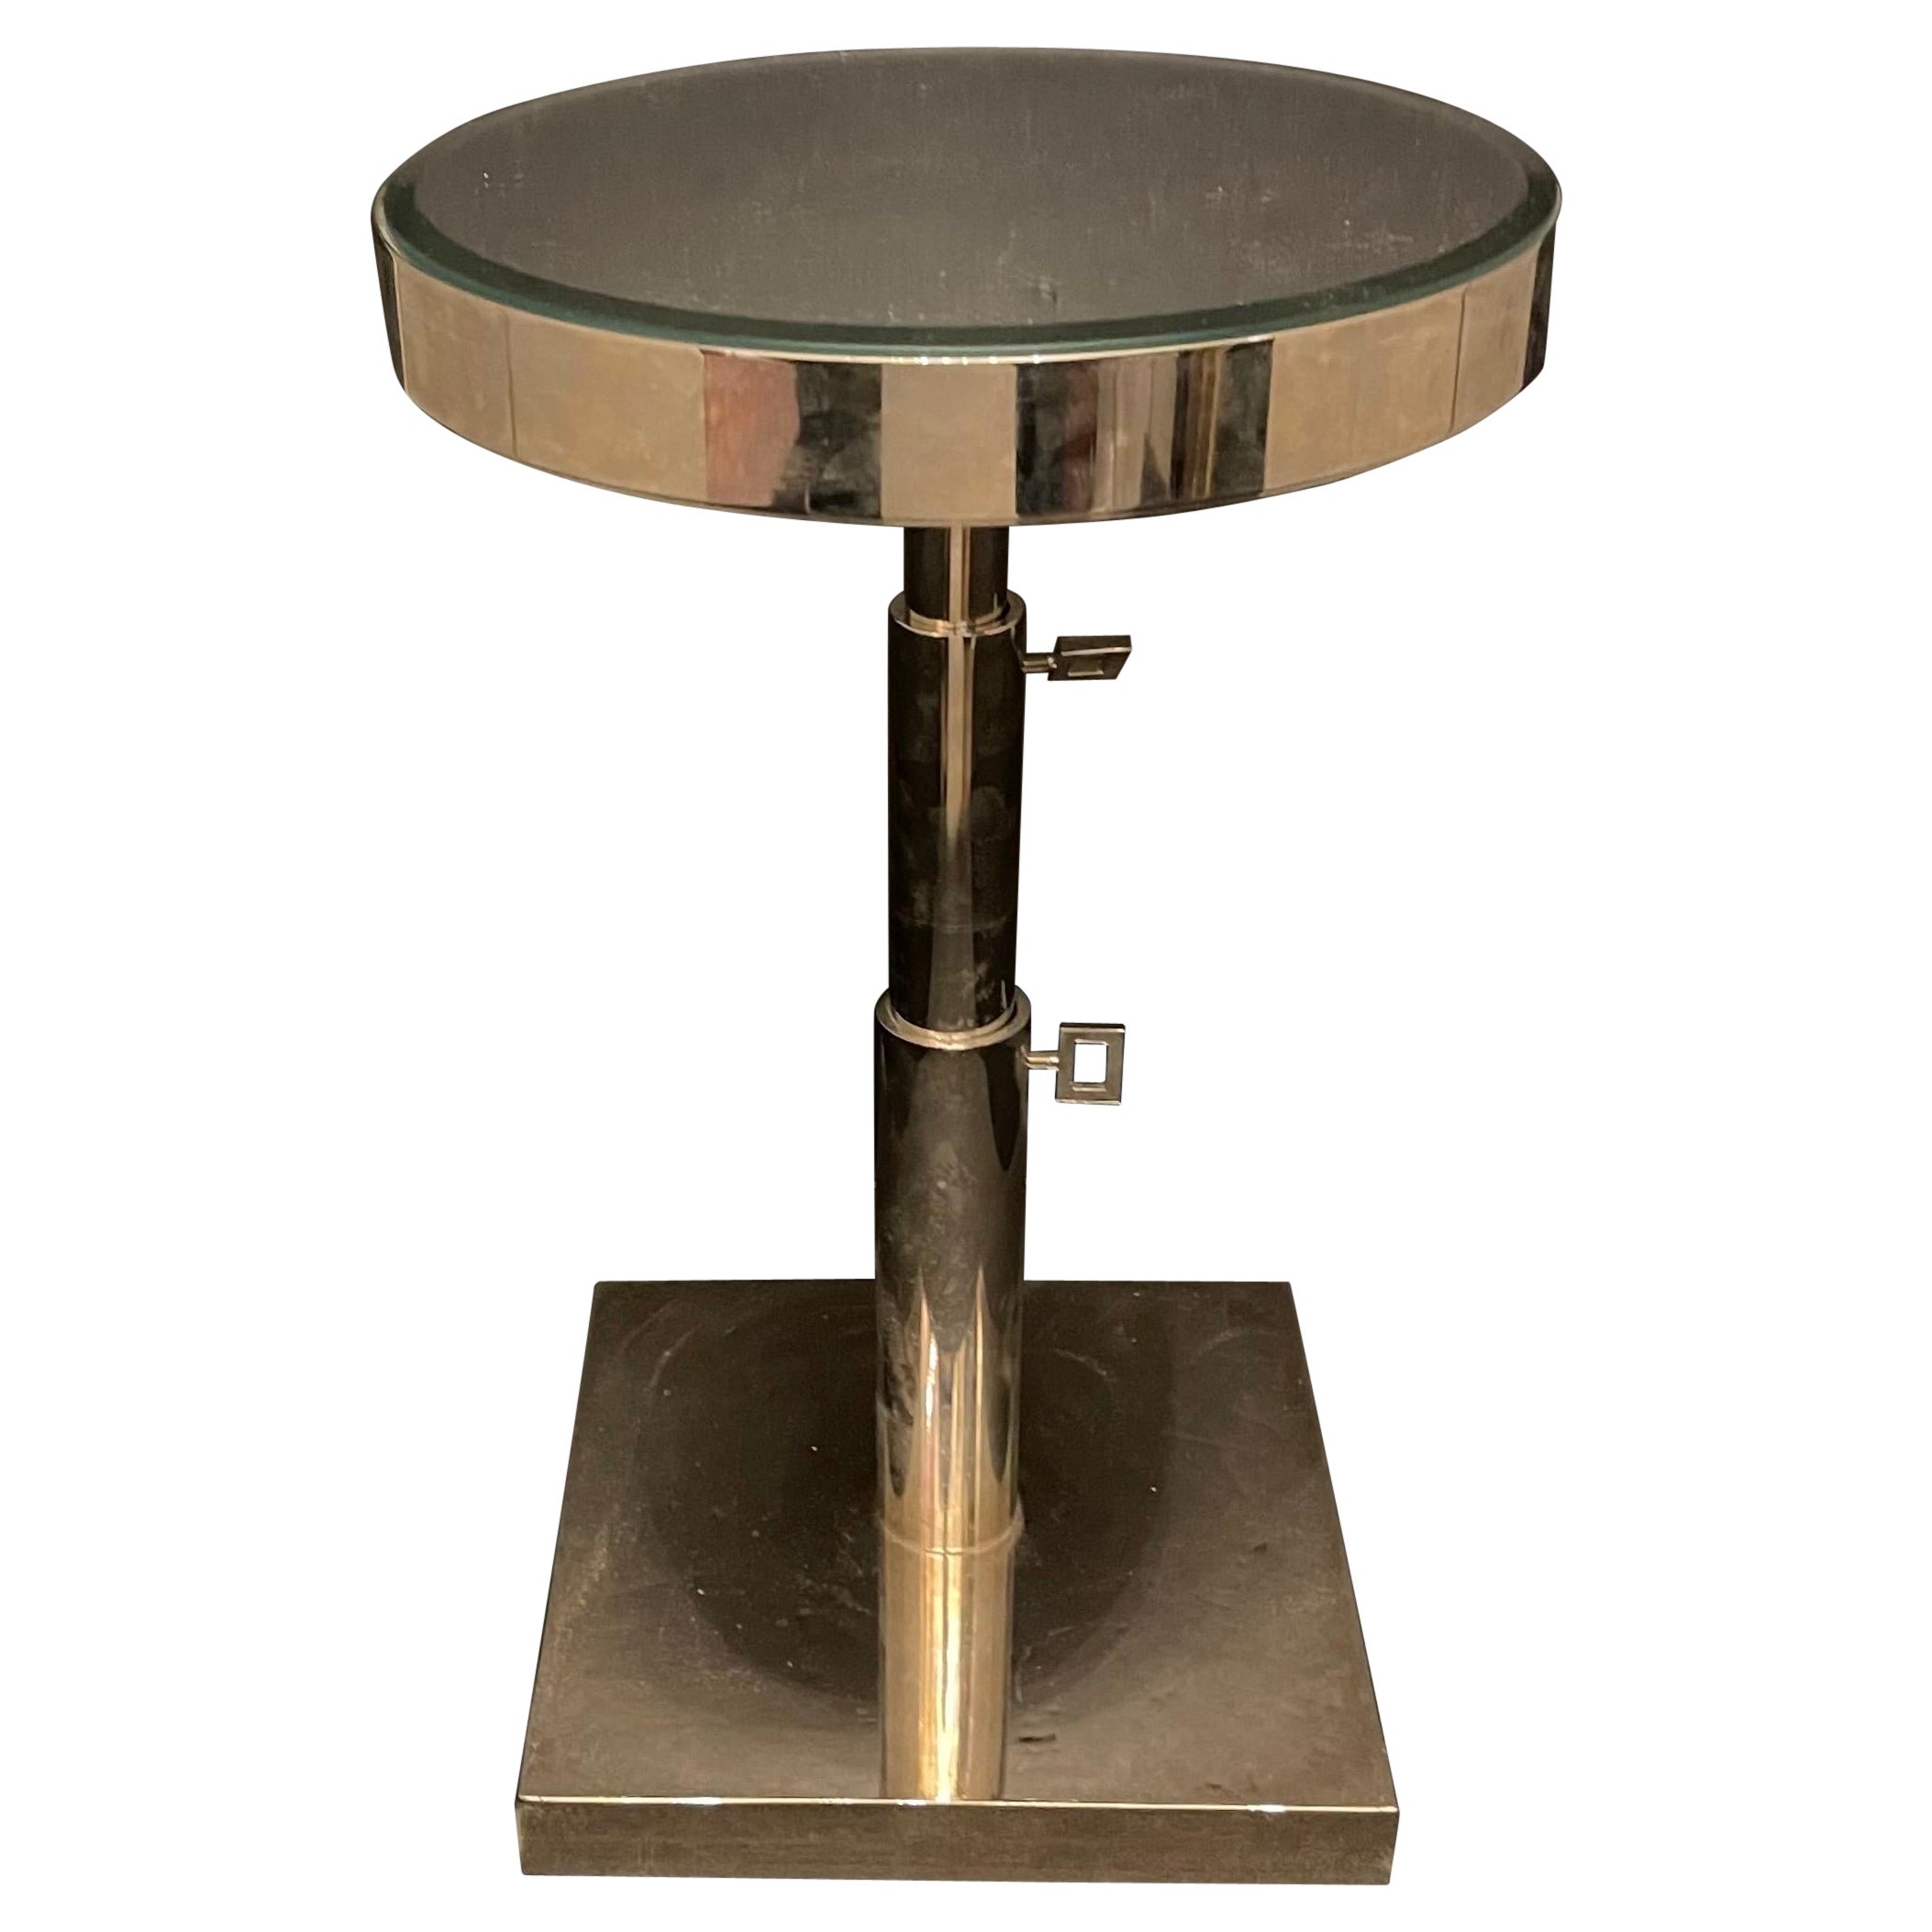 Merveilleuse table d'appoint télescopique Lorin Marsh en nickel poli avec plateau en miroir en vente